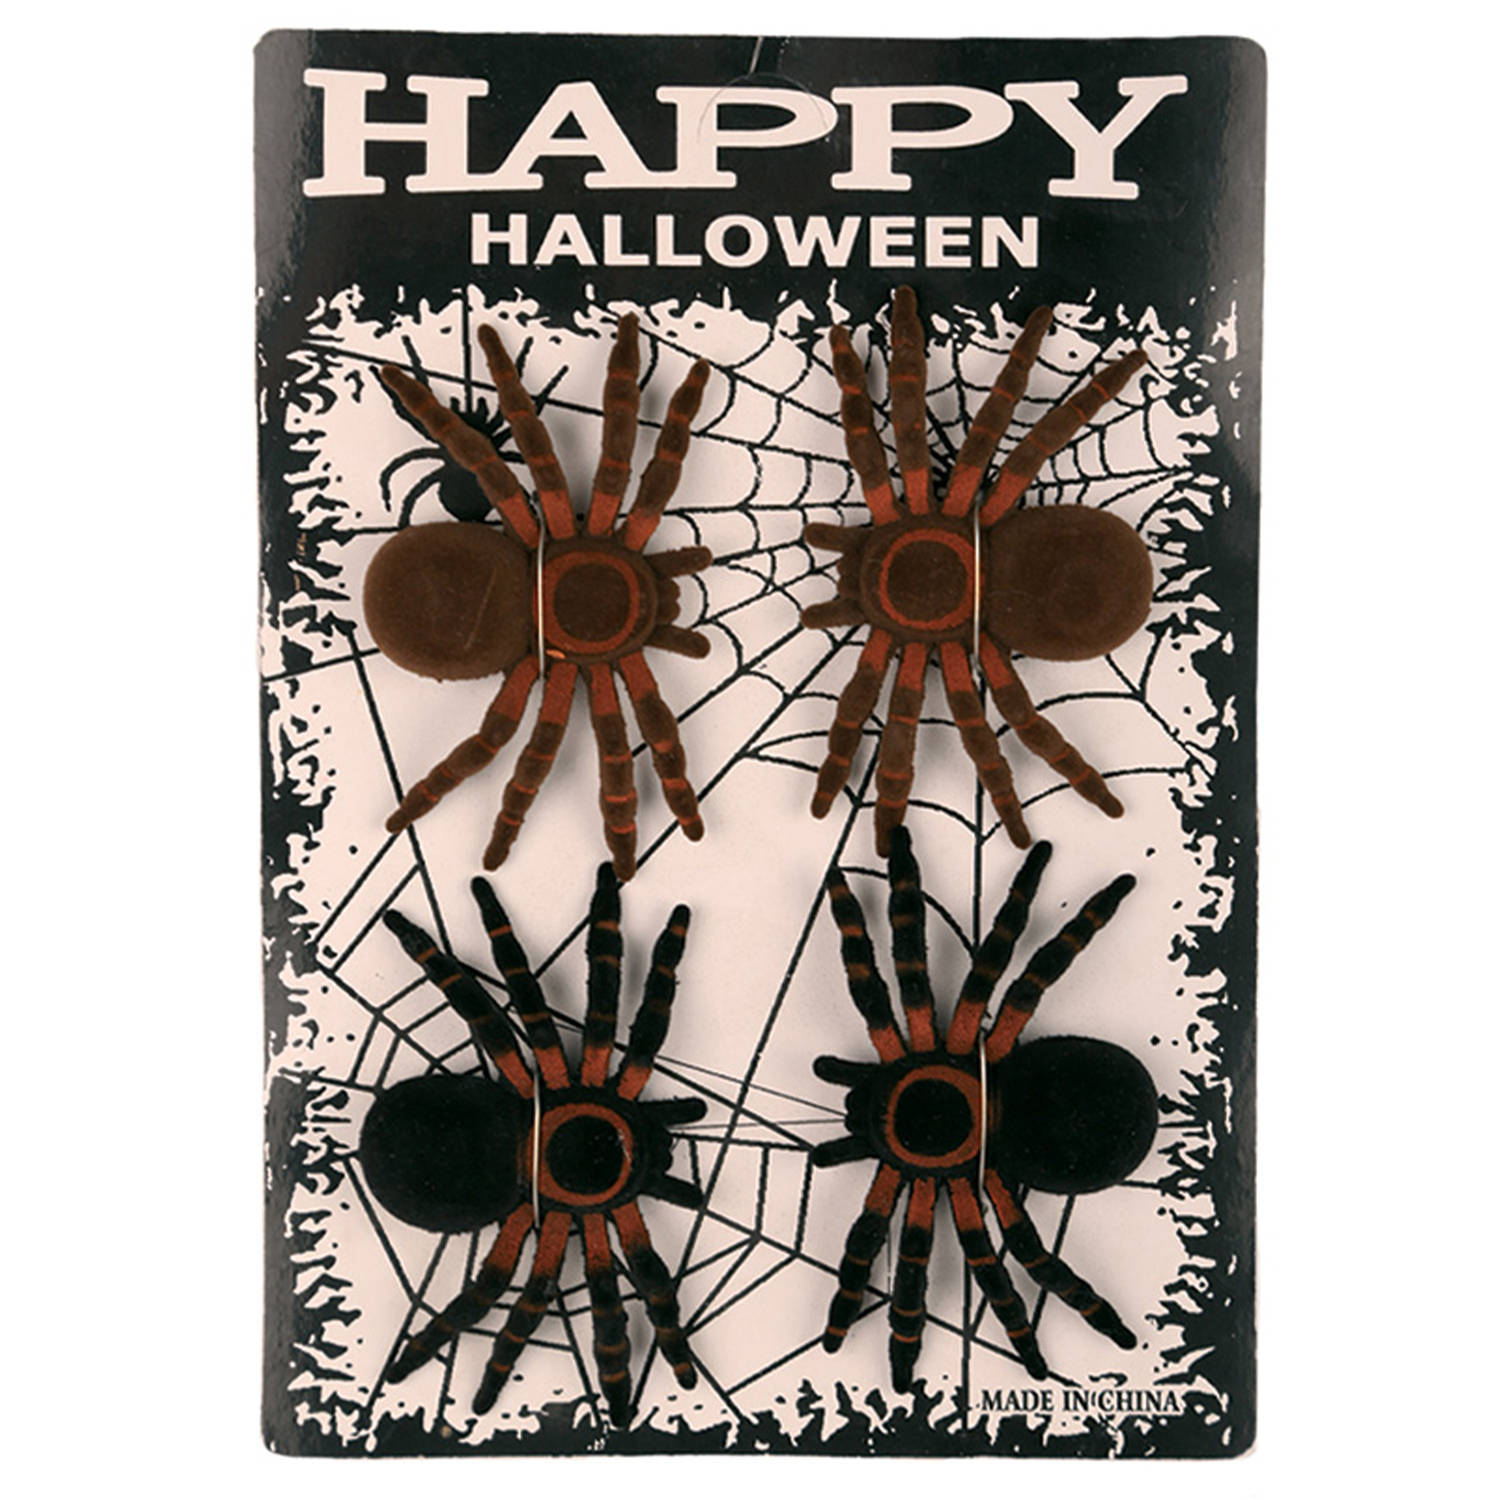 Faram nep spinnen/spinnetjes 8 cm - zwart/bruin - 4x stuks - Horror/griezel thema decoratie beestjes